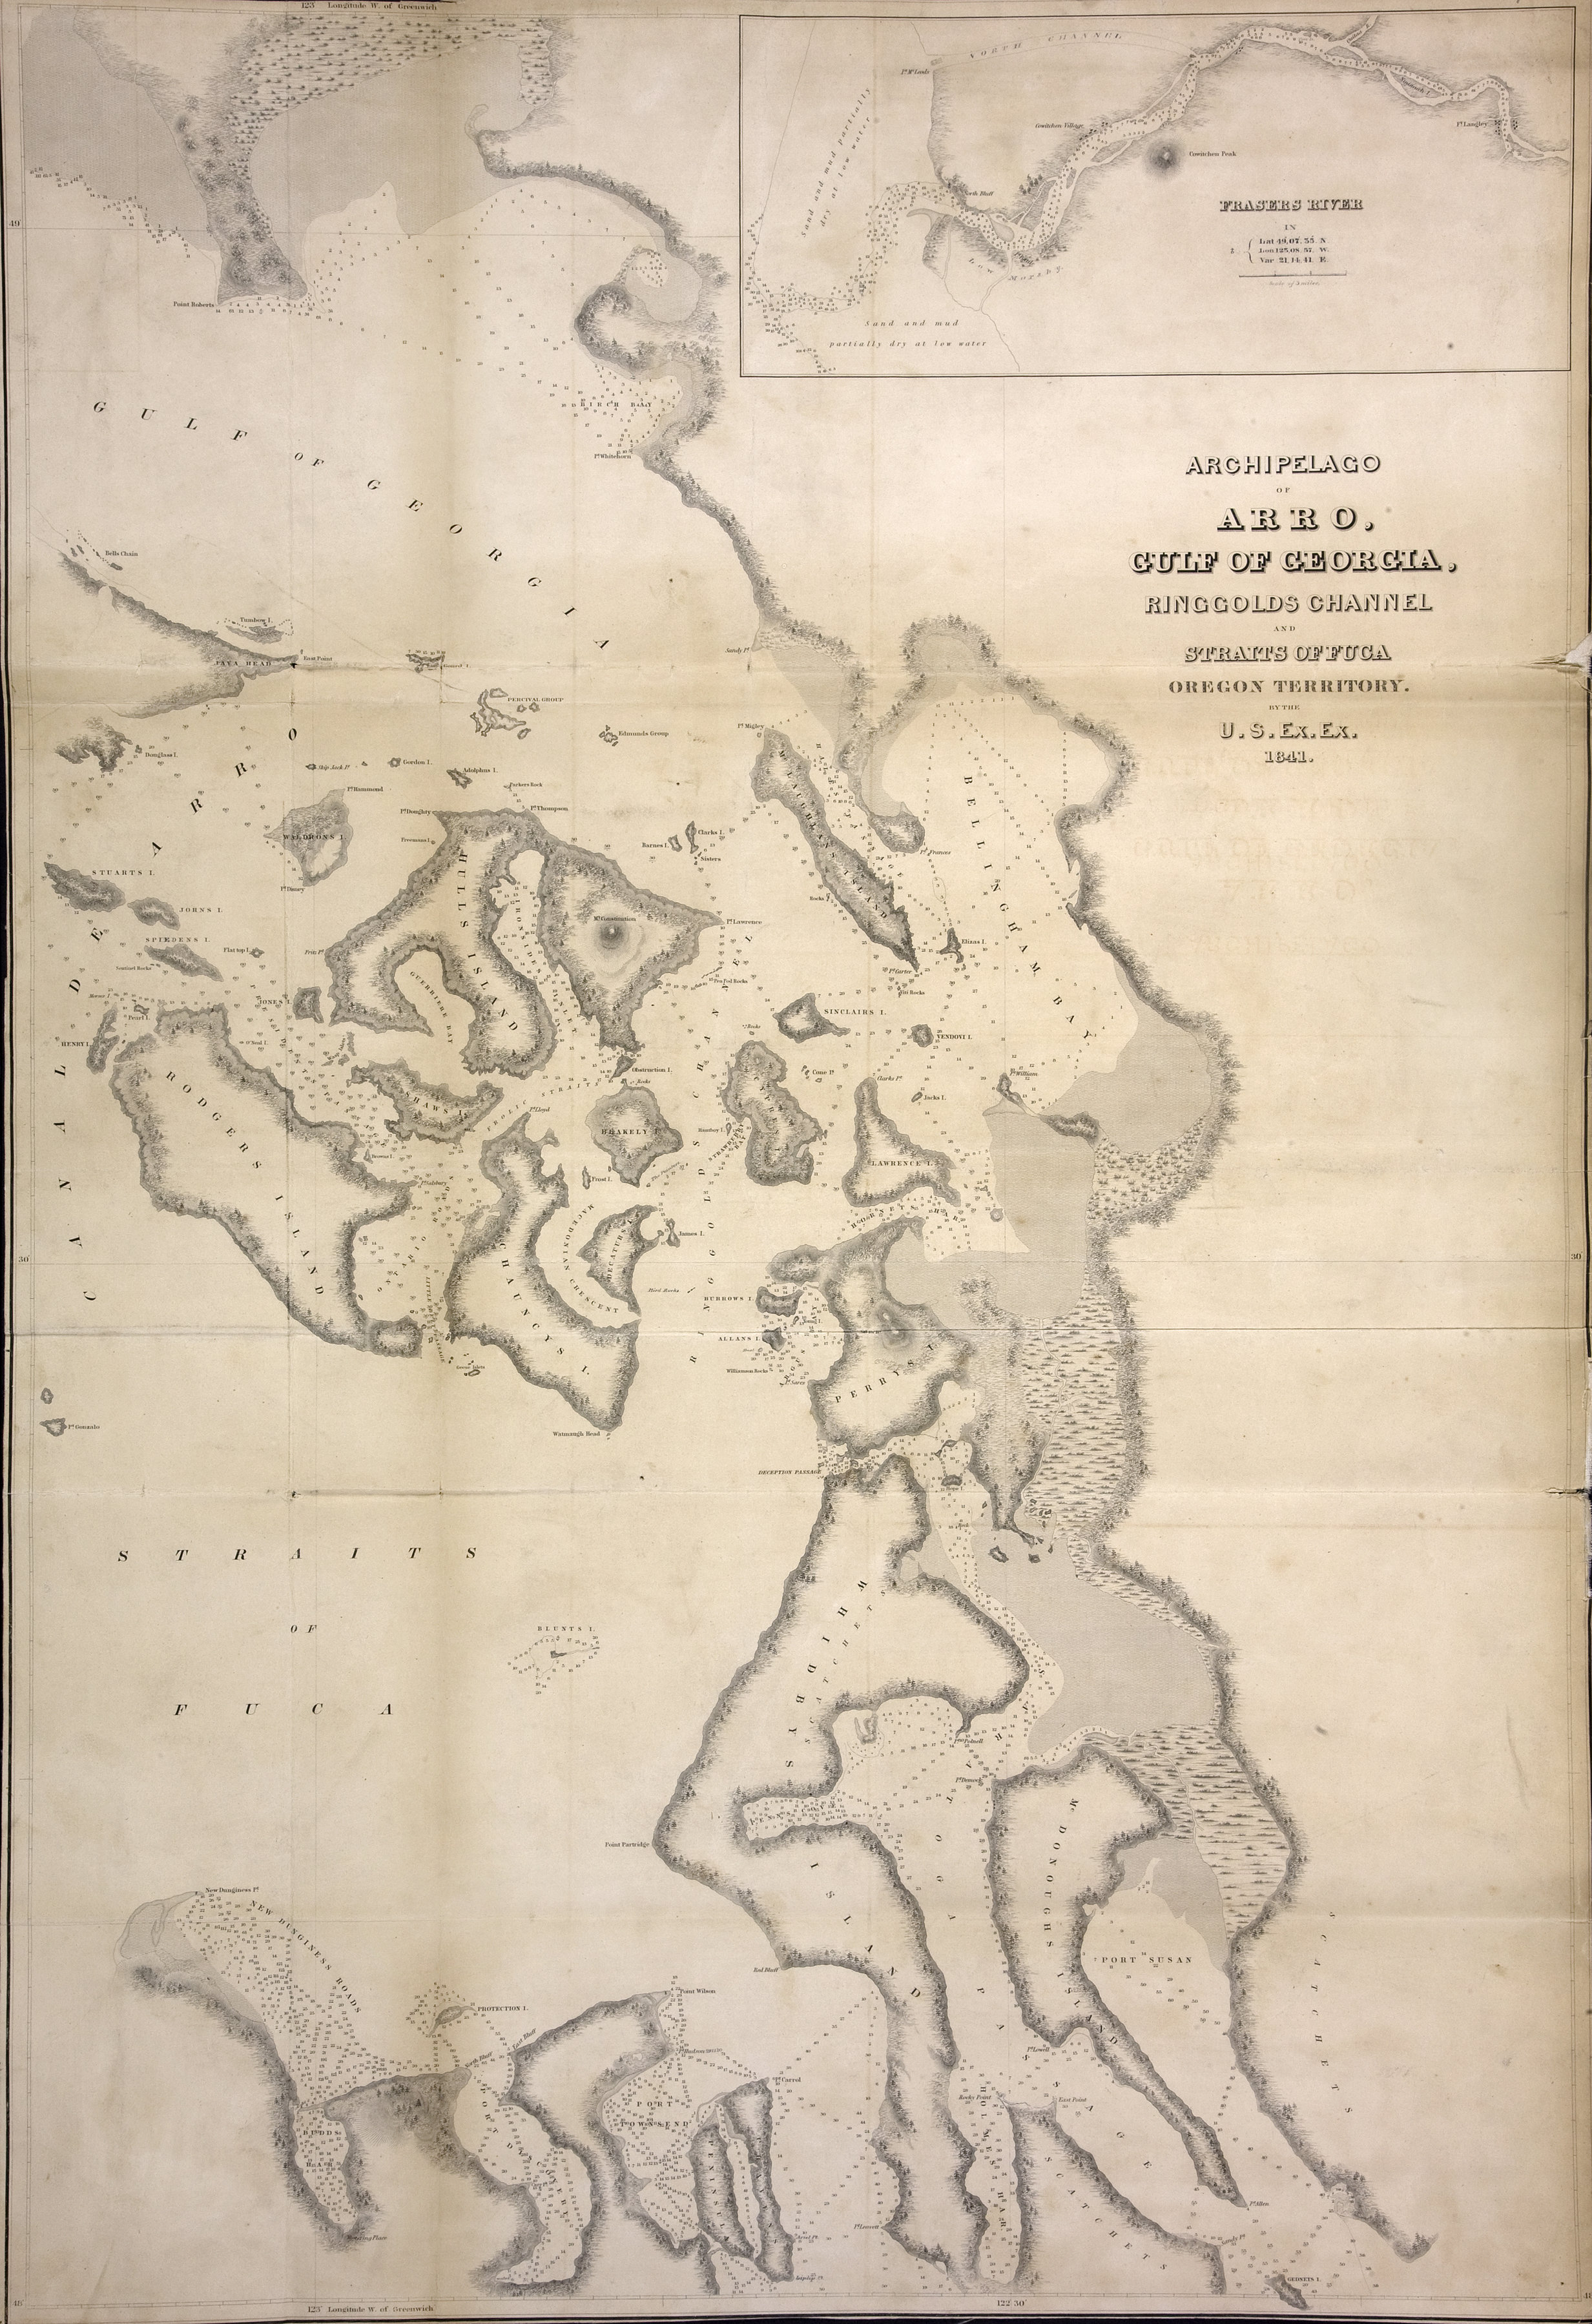 Archipelago of Arro, Gulf of Georgia, Ringgold's Channel and Straits of Fuca, Oregon Territory